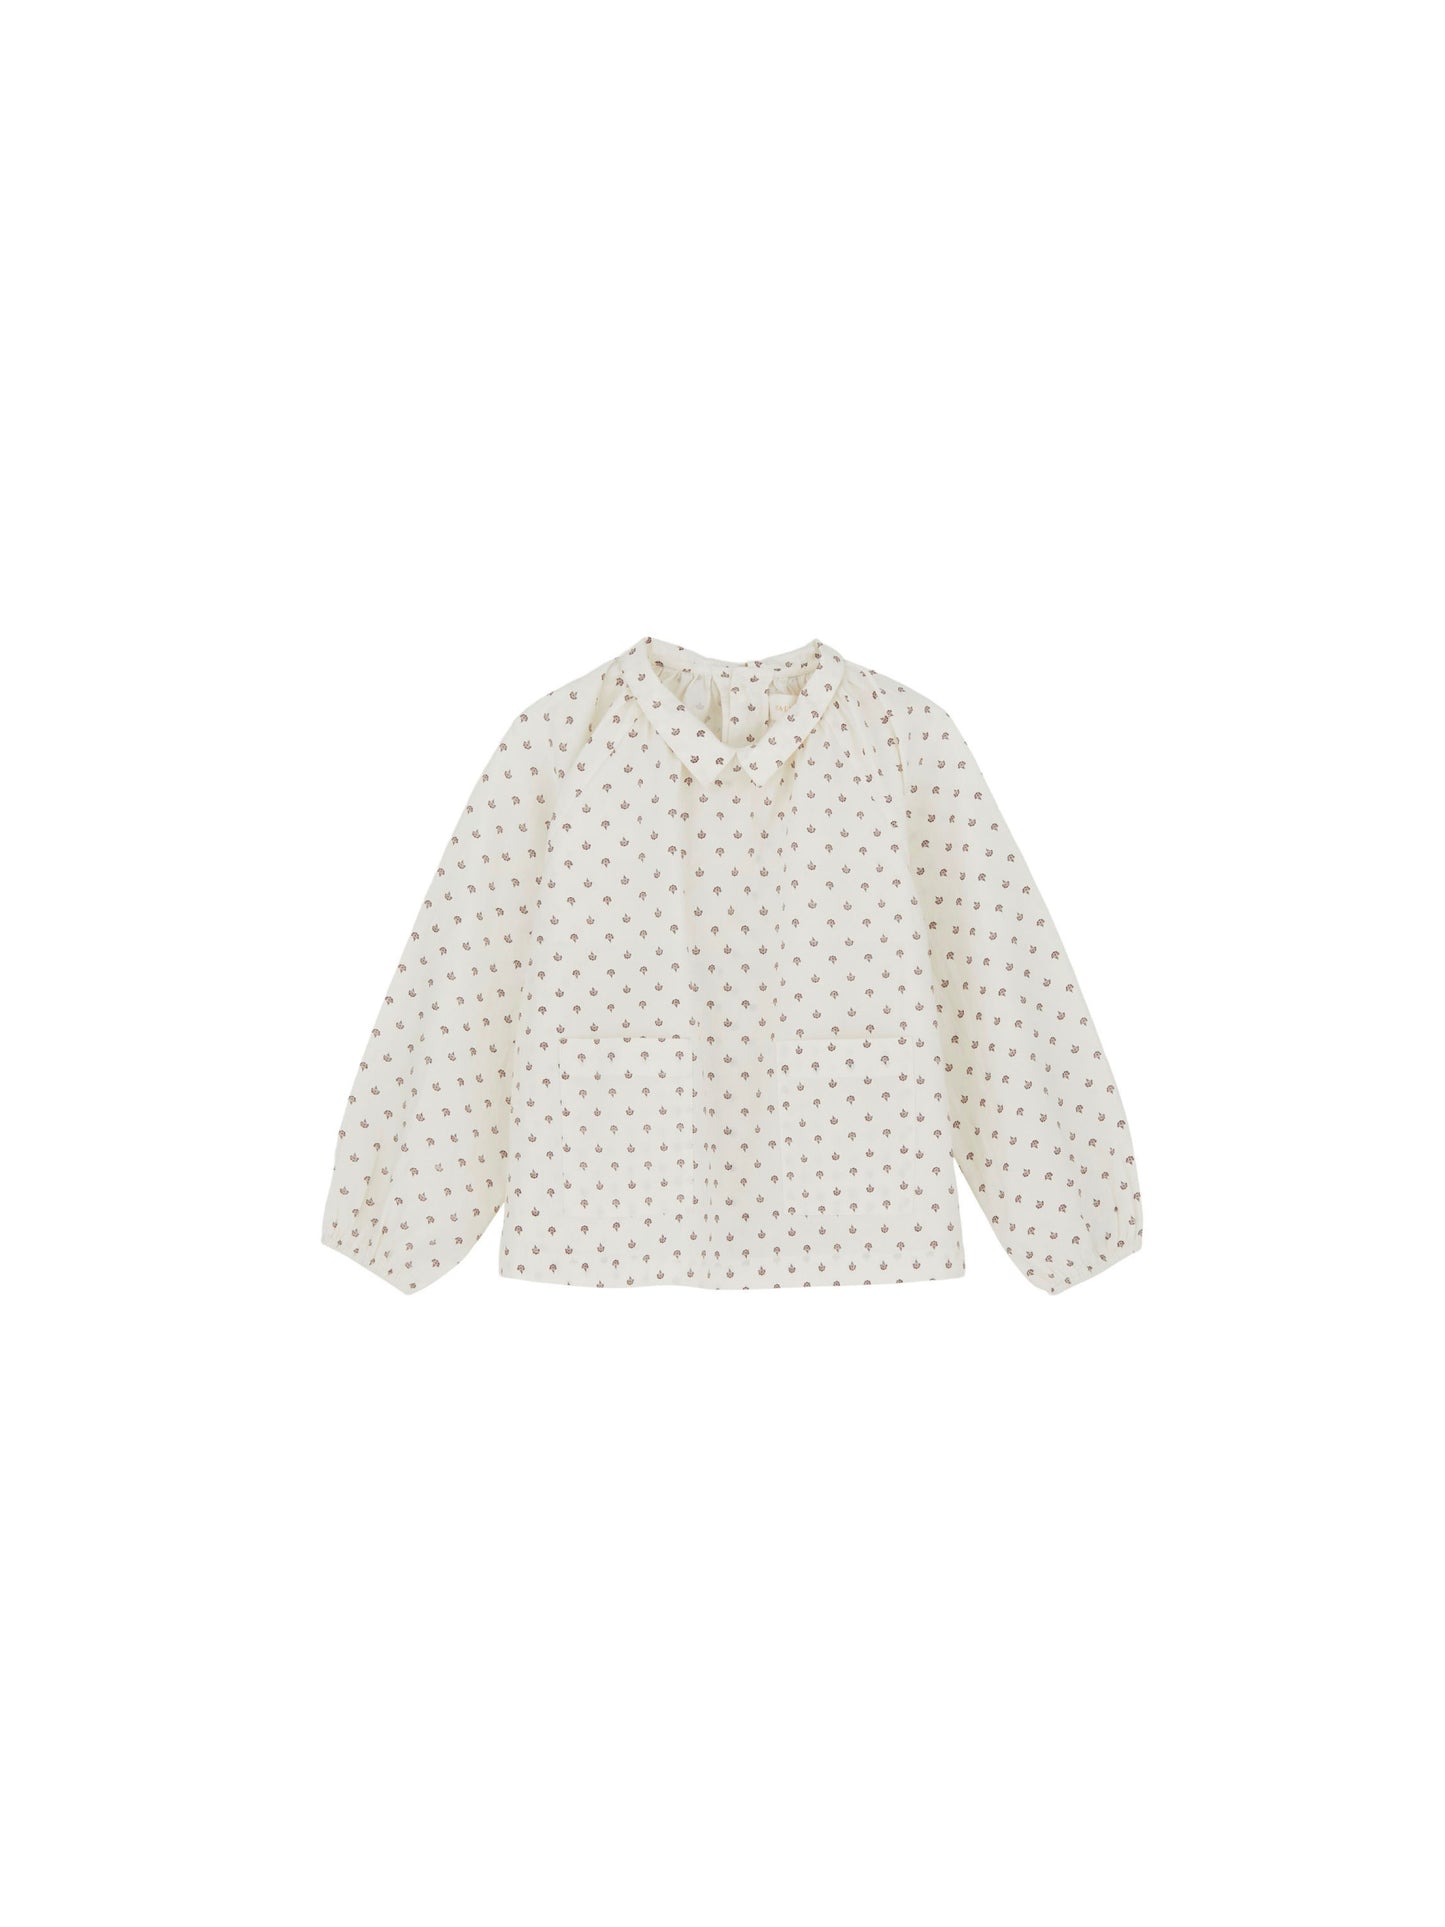 Skall Musling - Winnifred blouse - Alistair print/light cream/dark burgundy